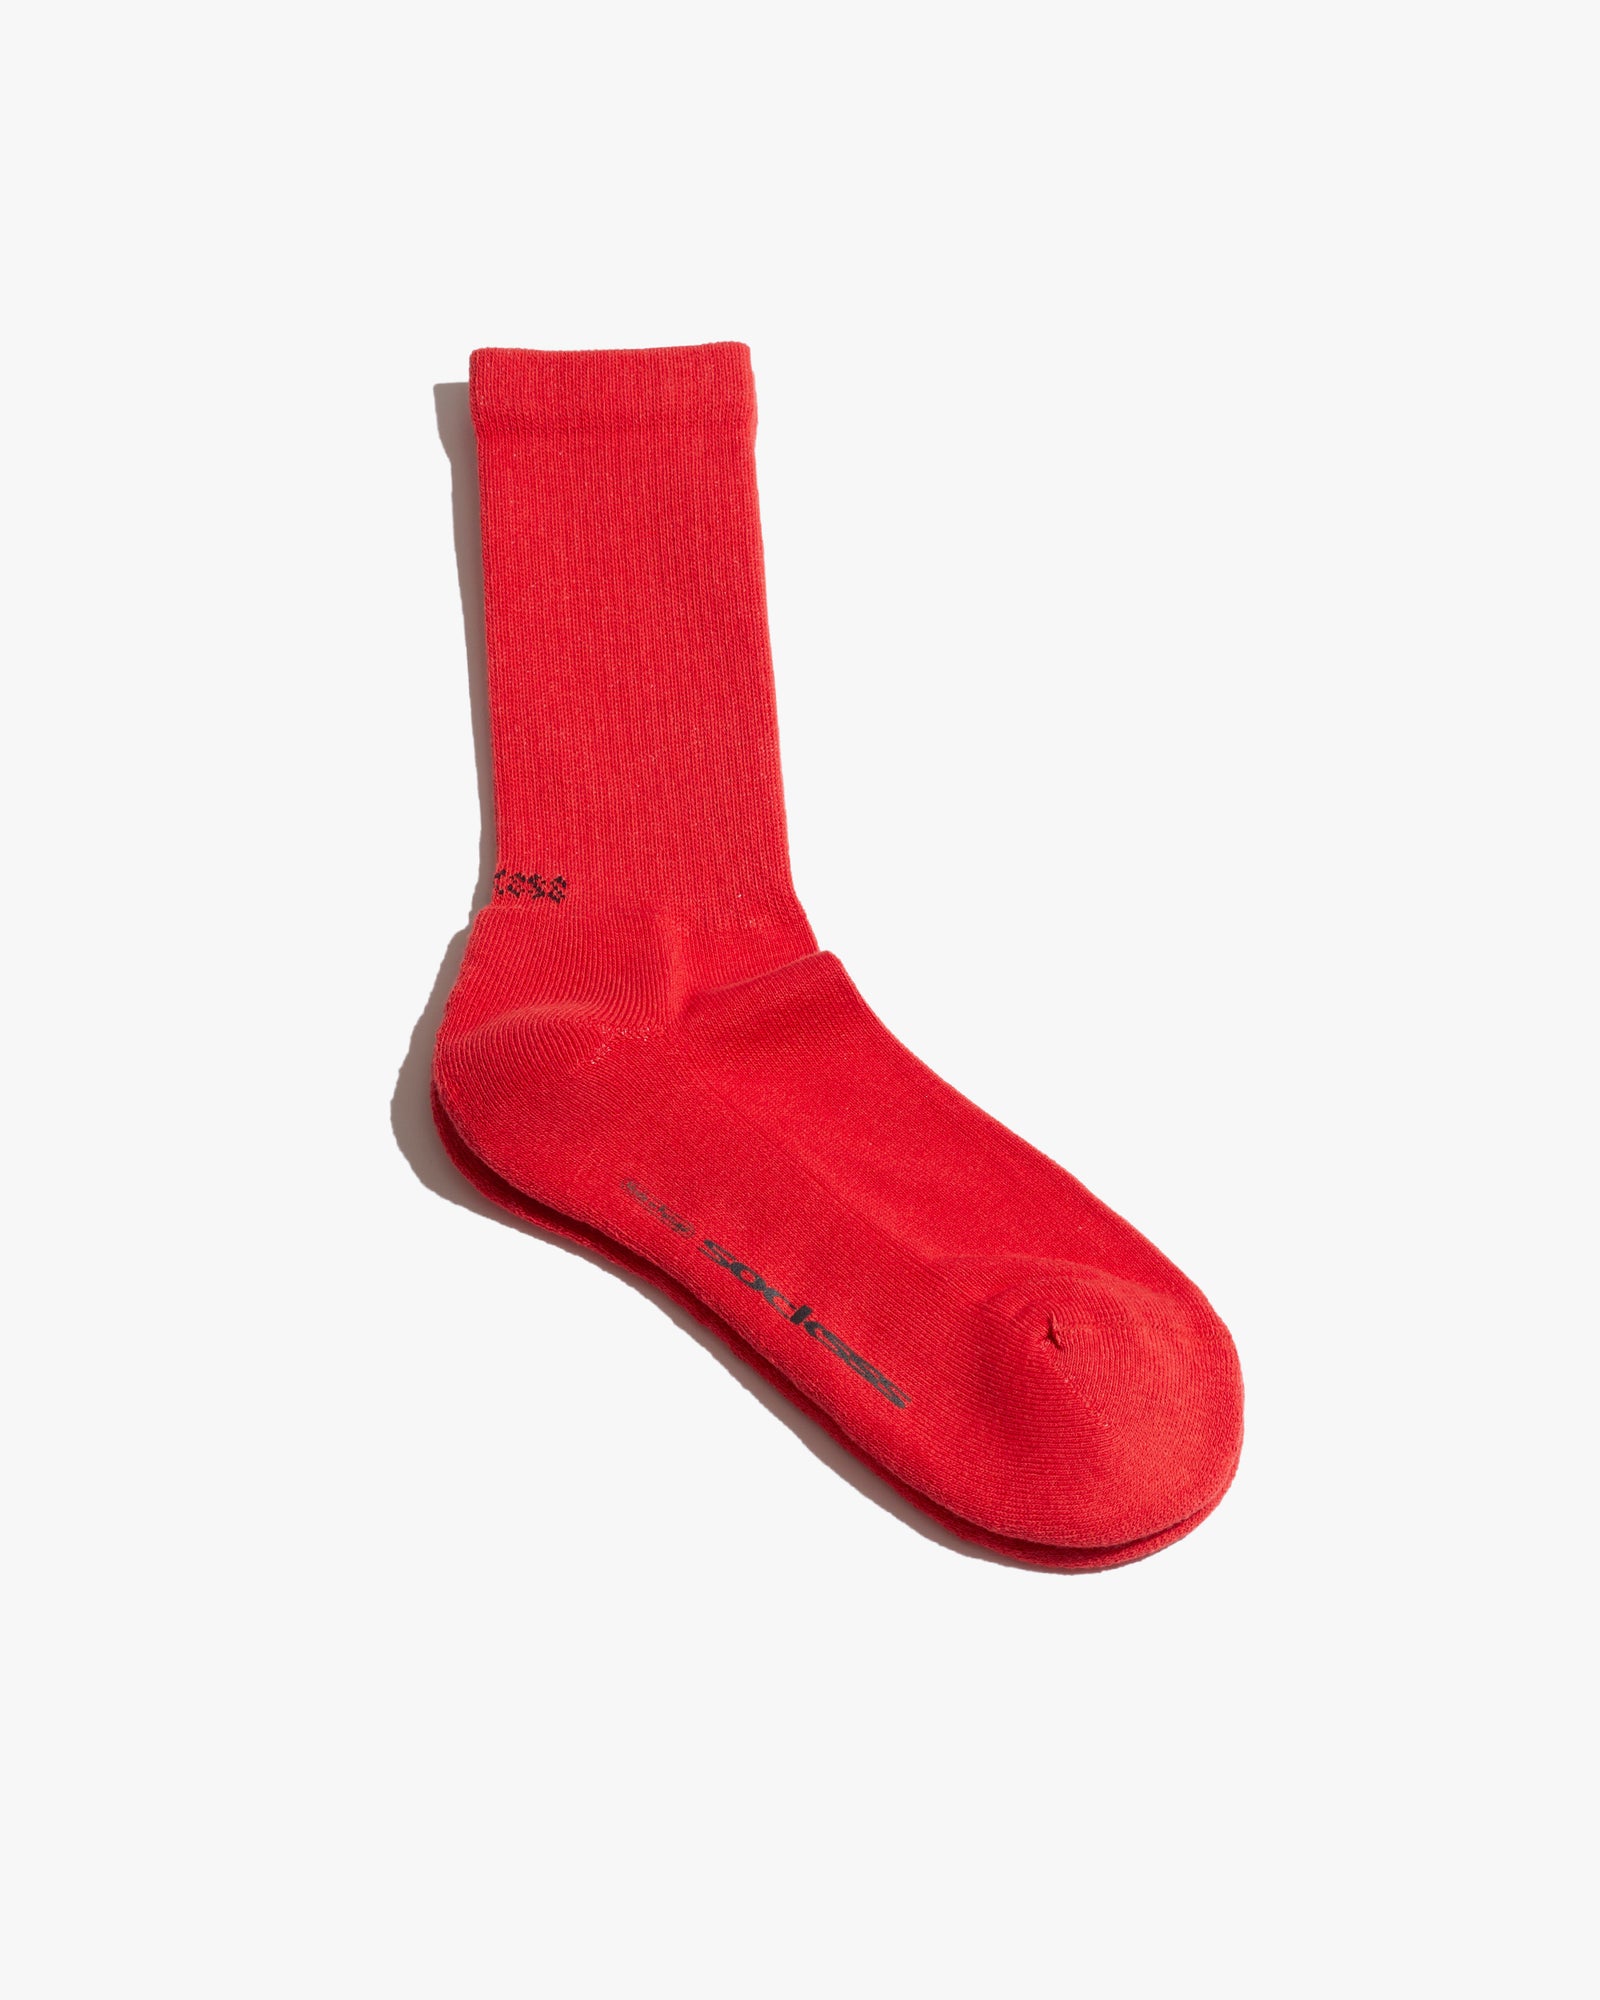 Cherry Original Socks